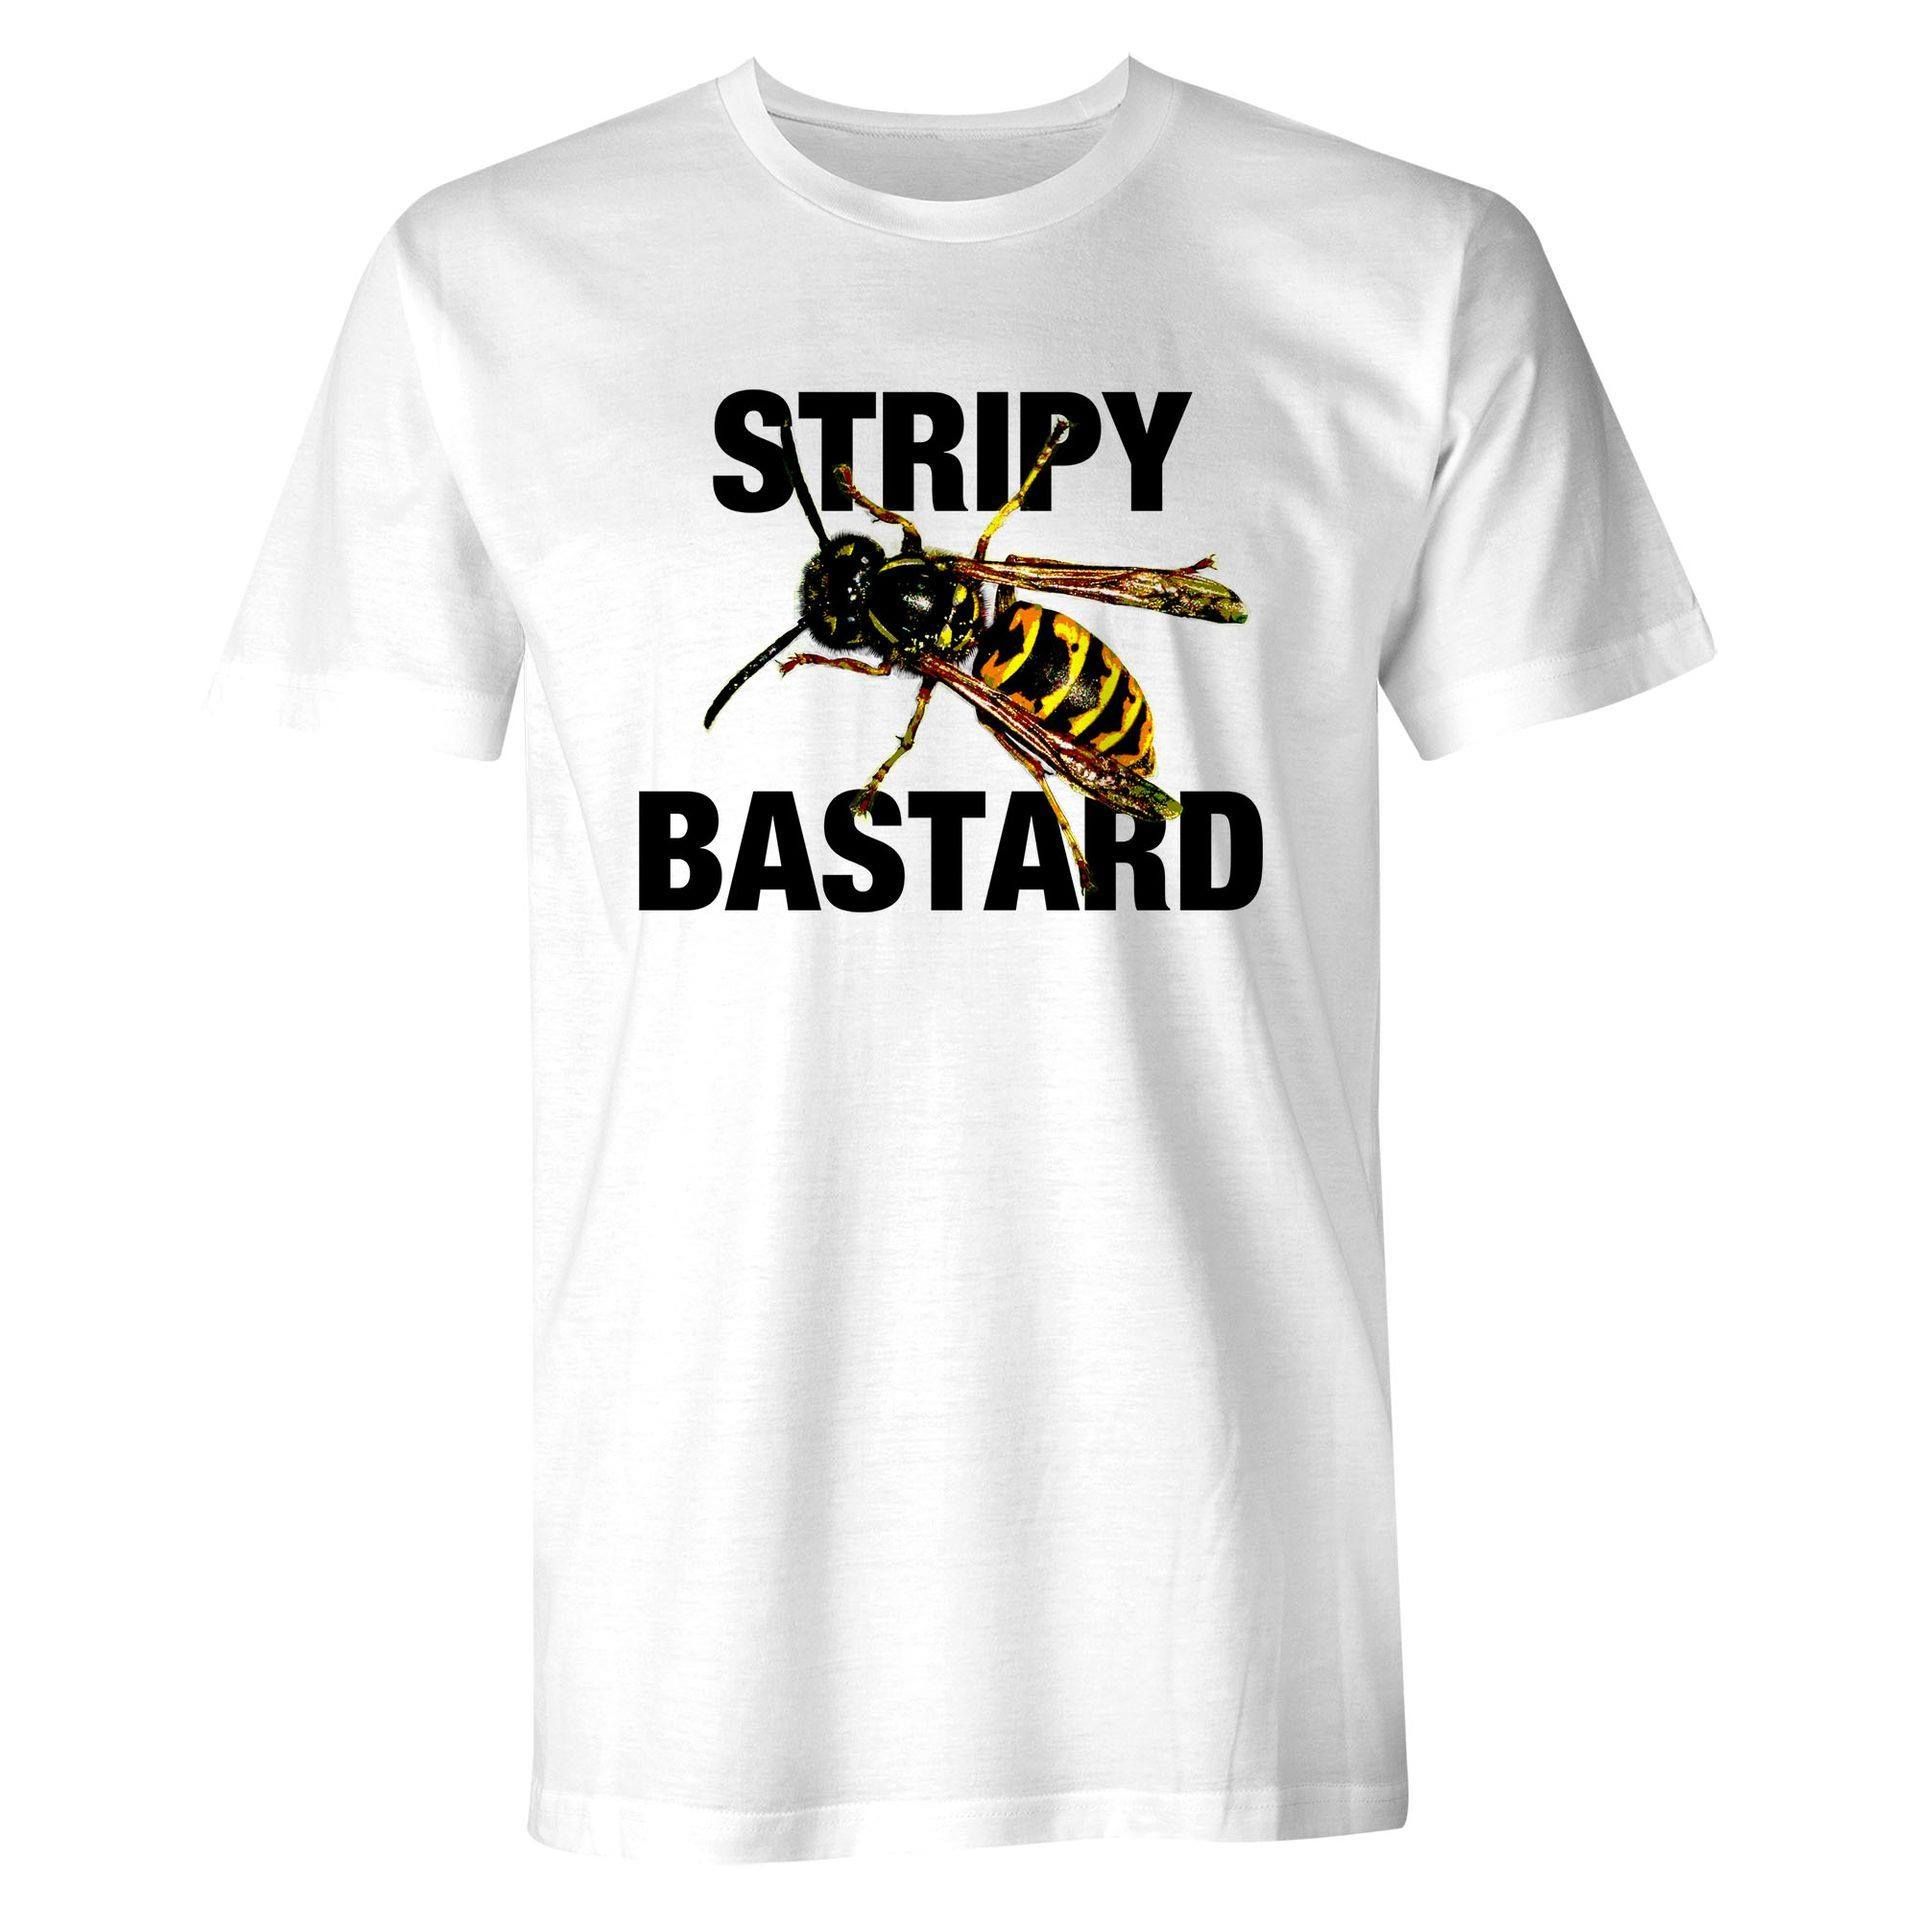 Stripy bastard - Bee lover